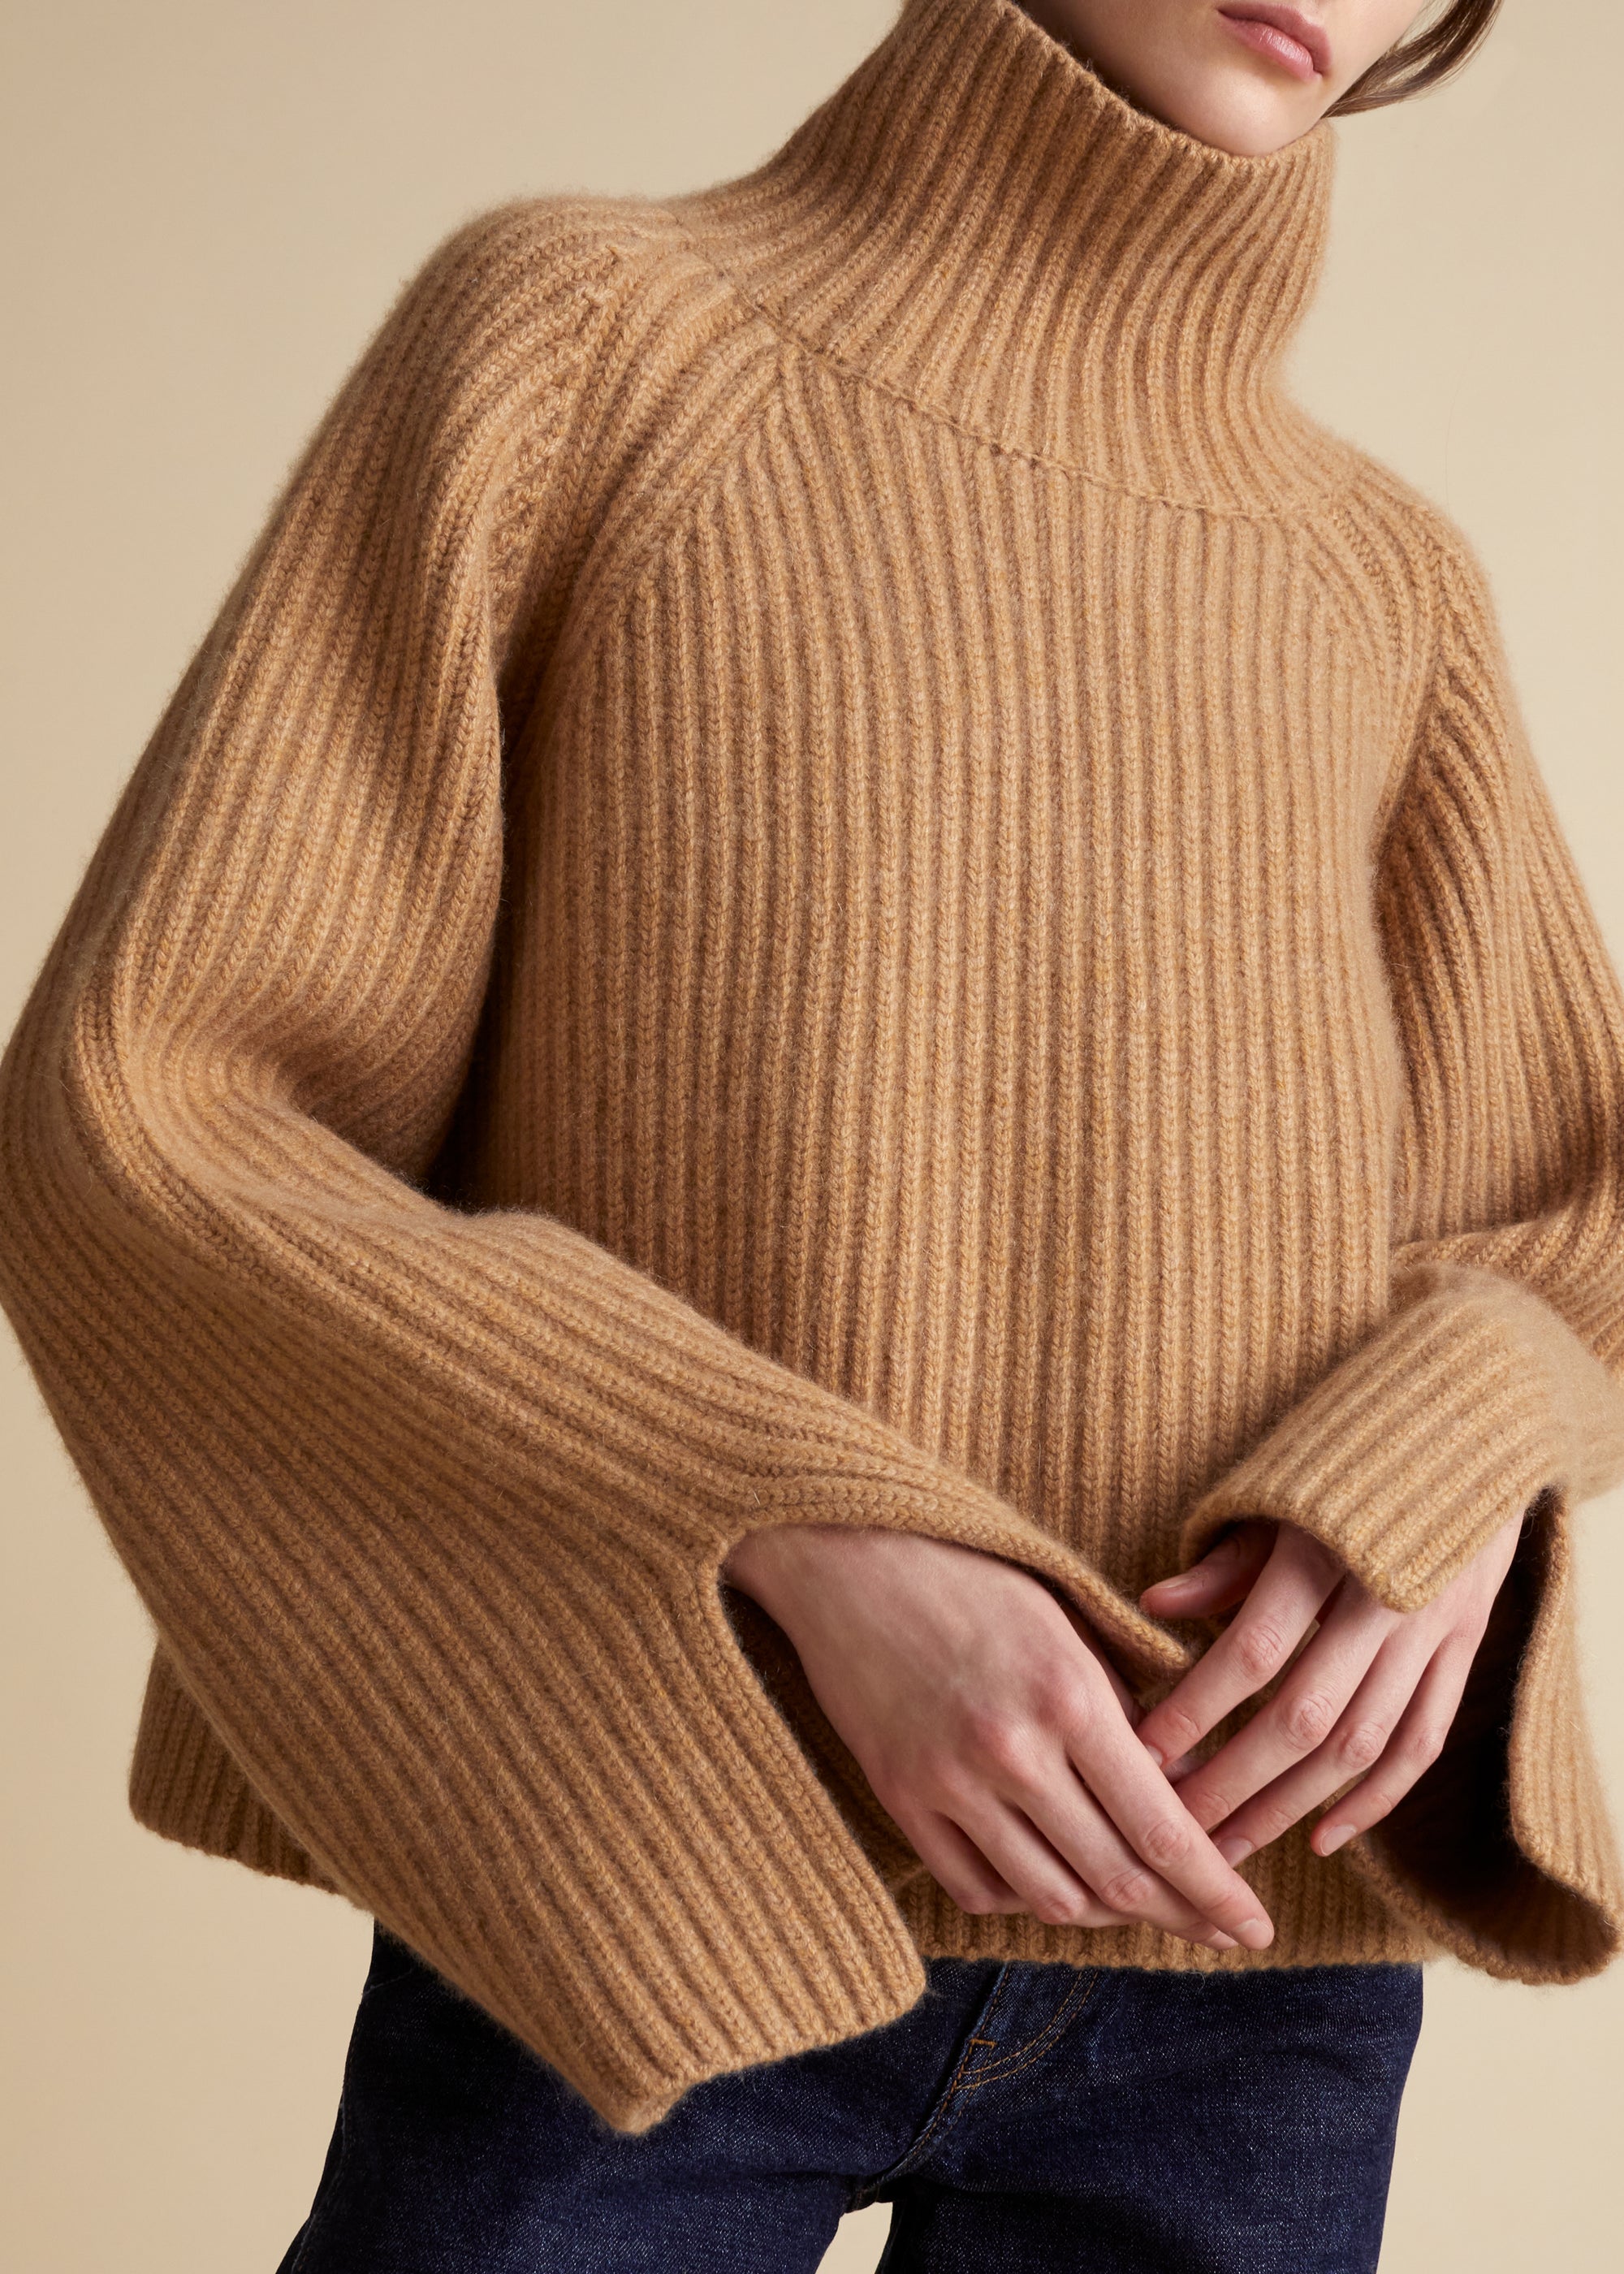 Genoa sweater in cashmere - Desert